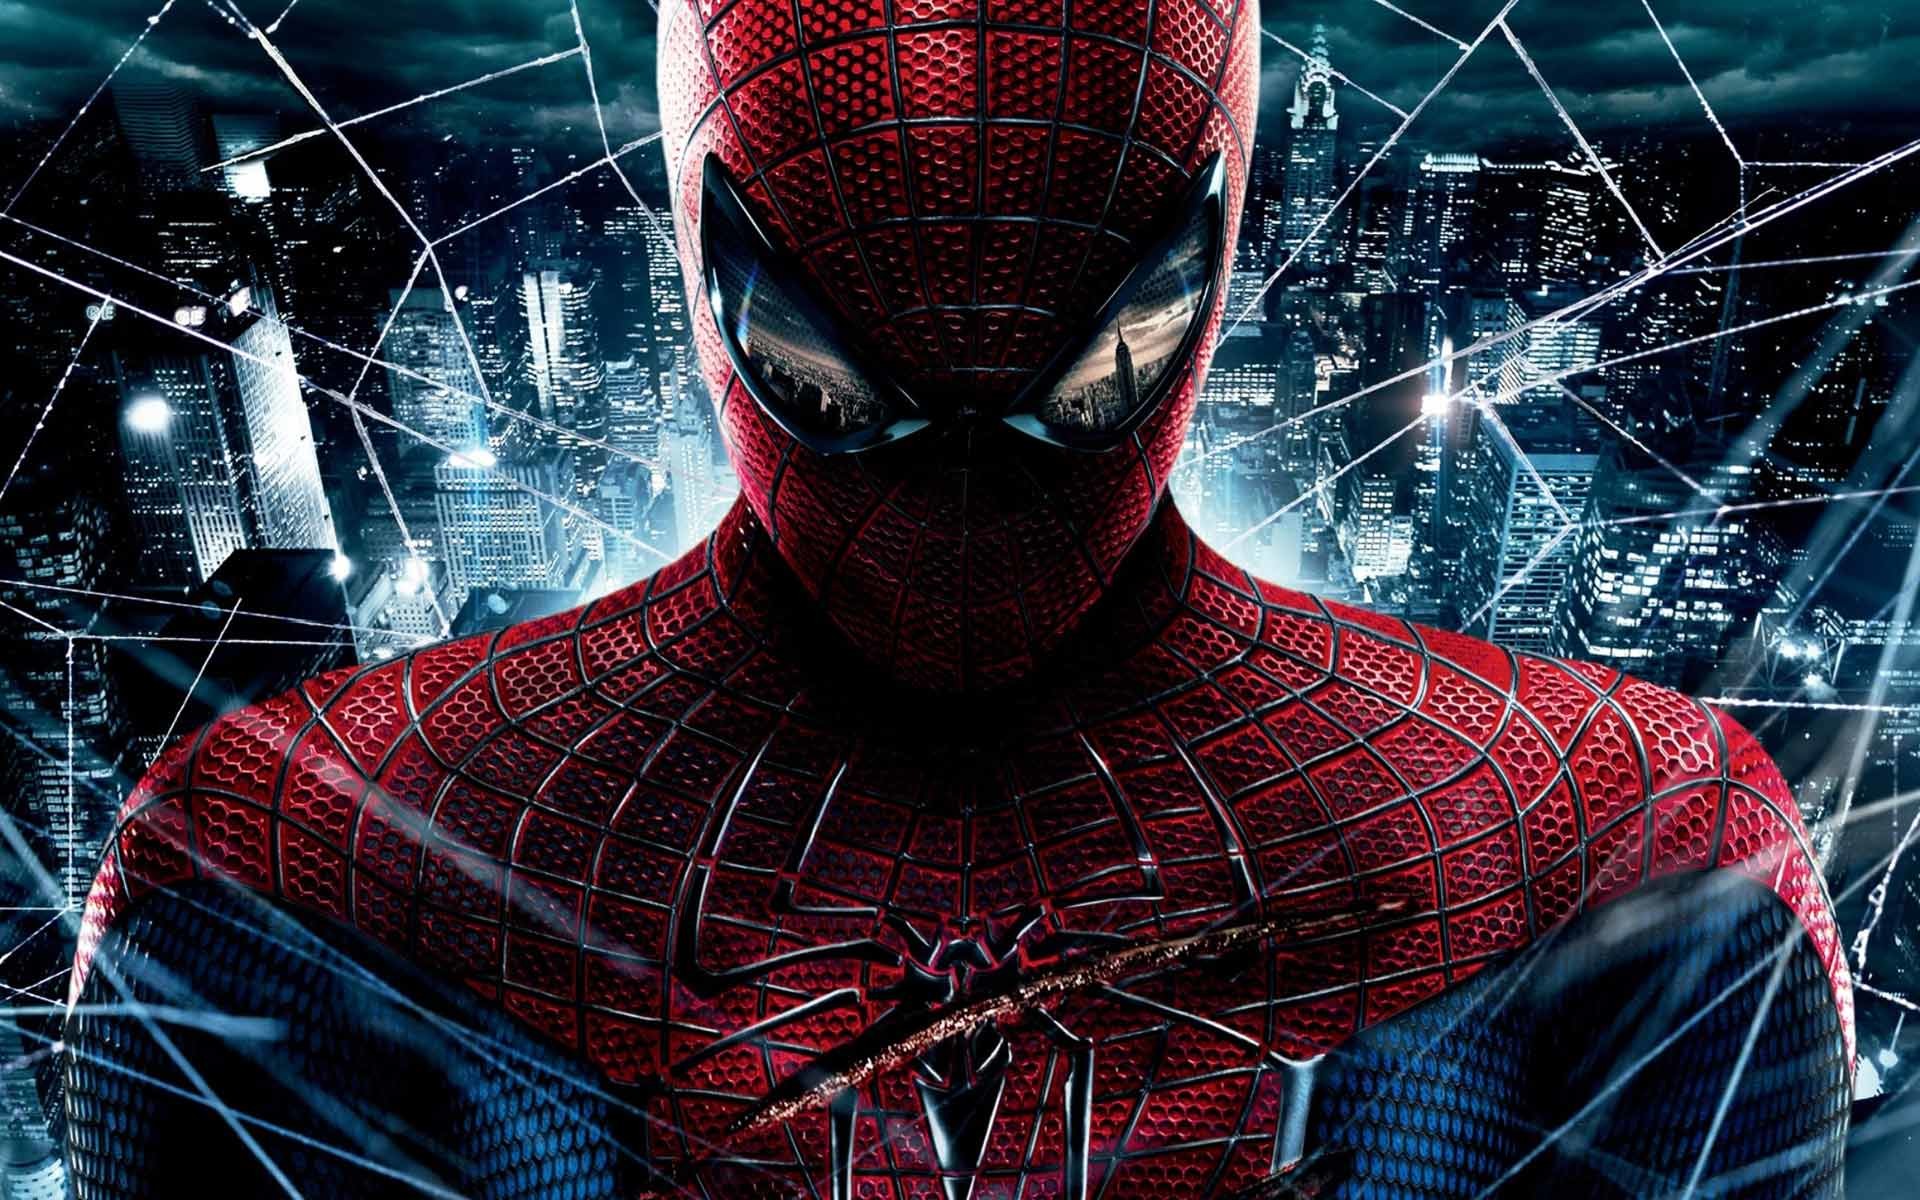 The Amazing Spider Man 2 Desktop Backgrounds. amazing spider man 2 movie wallpapers desktop backgrounds the amazing spiderman 2014 hd wallpapers 6